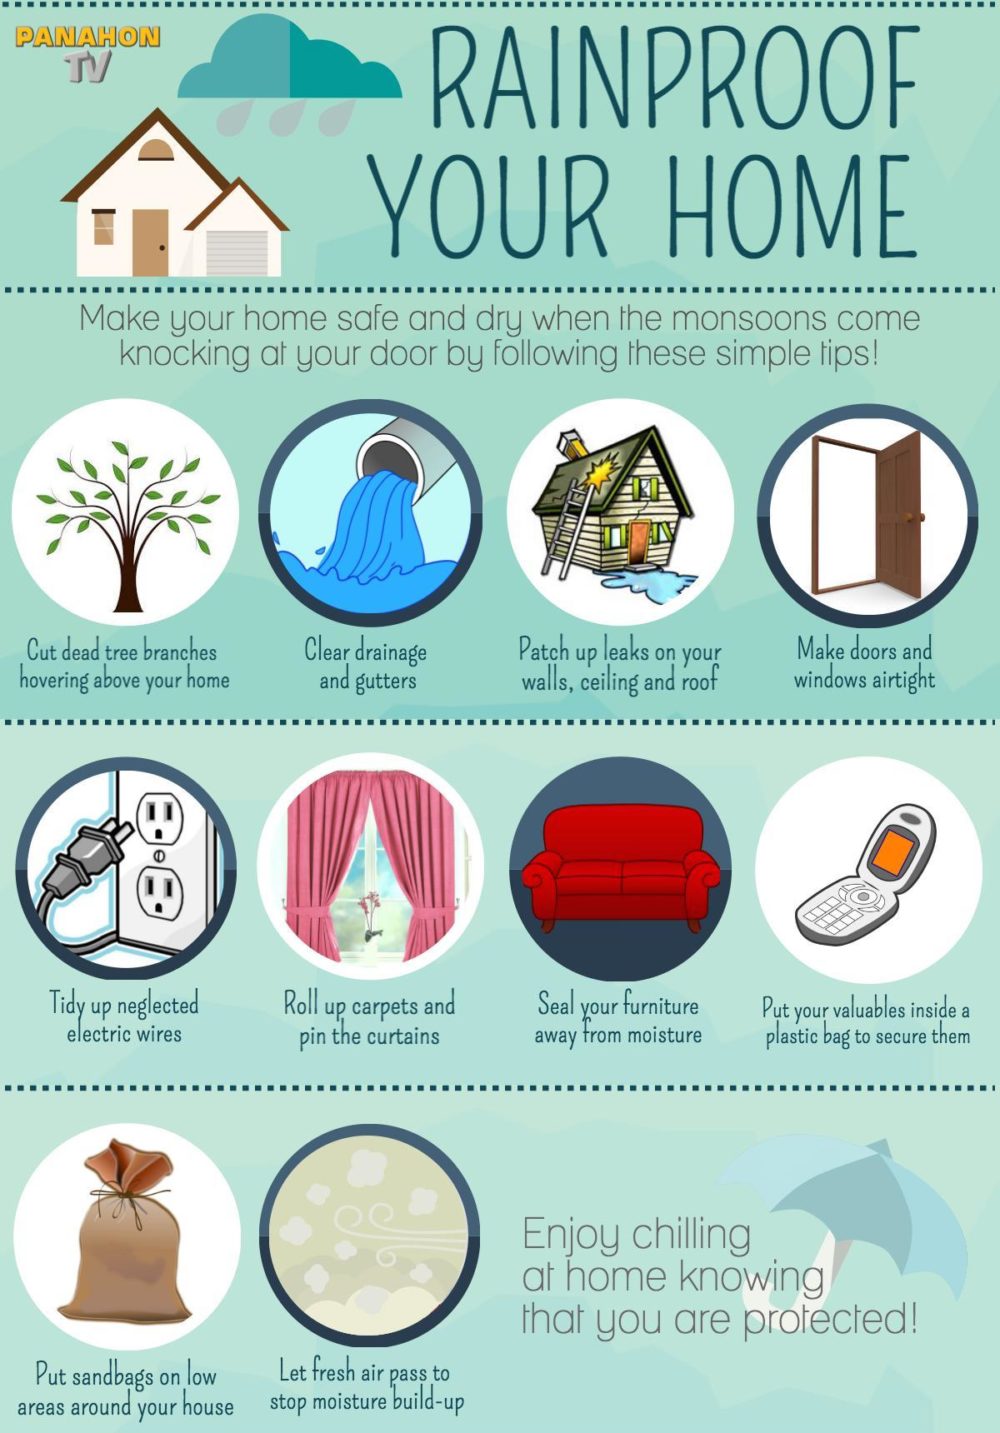 10 Ways To Rainproof Your Home